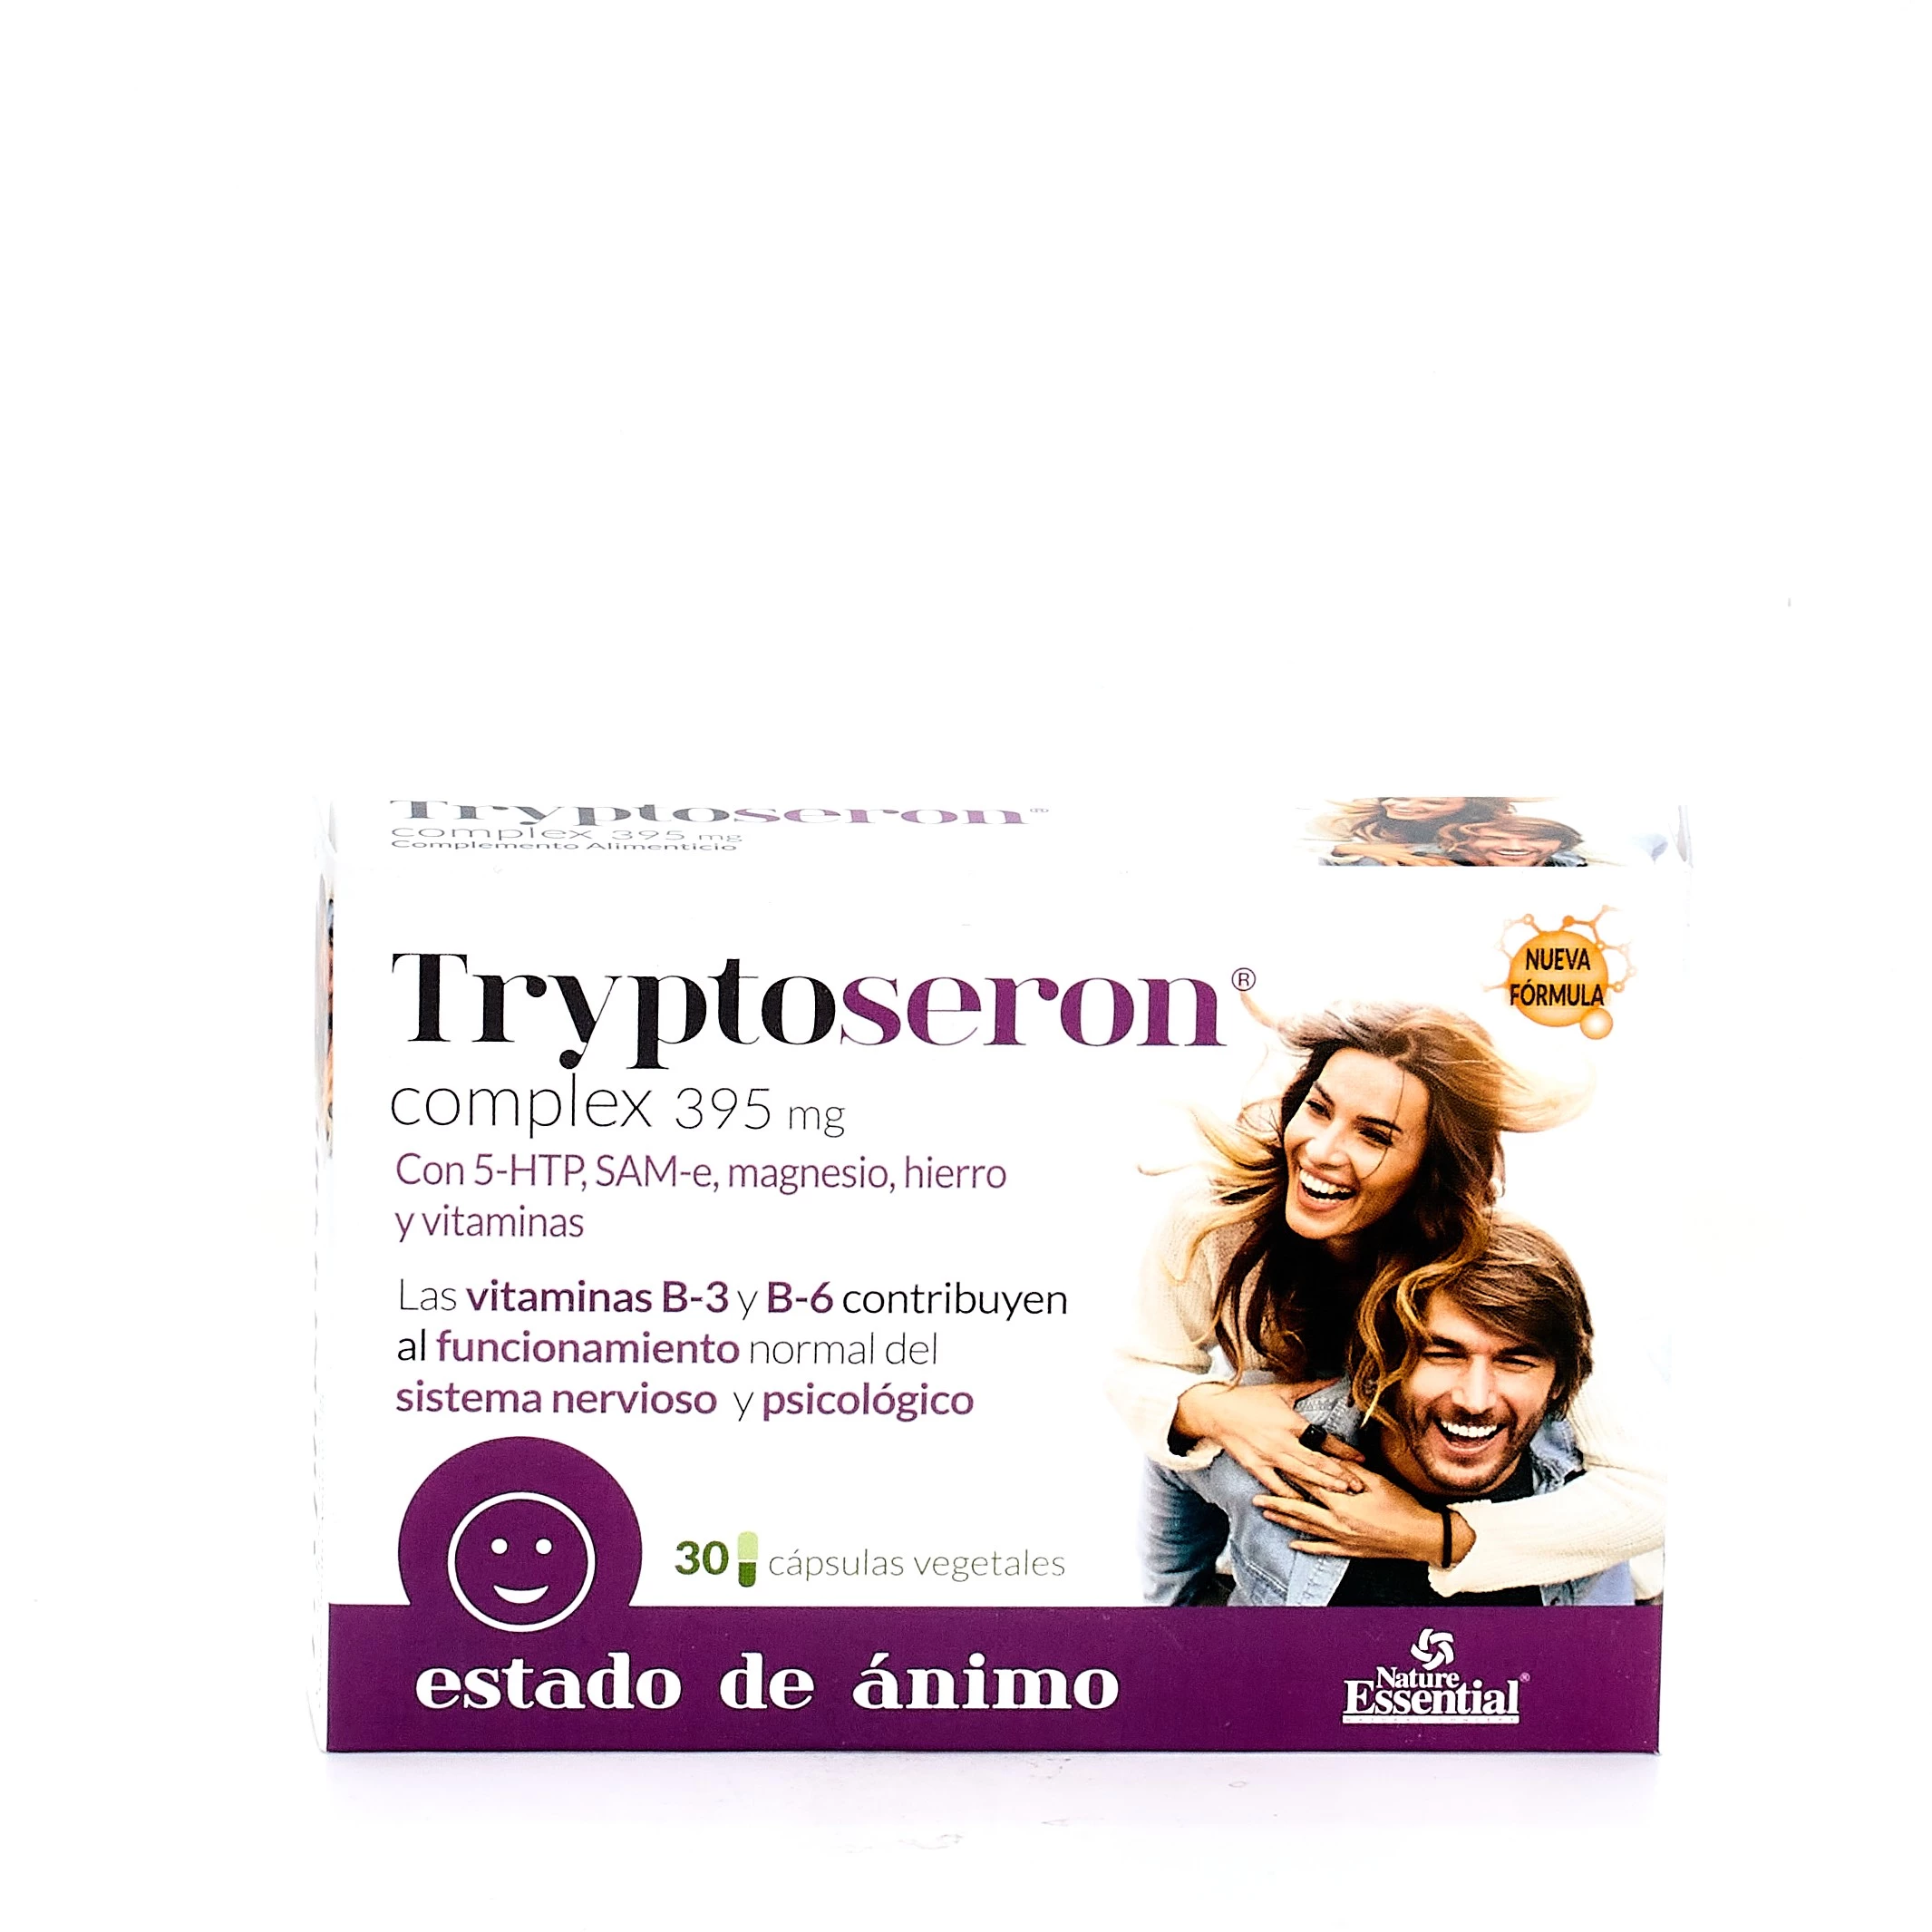 Nature Essential Tryptoseron complex. 30 capsulas